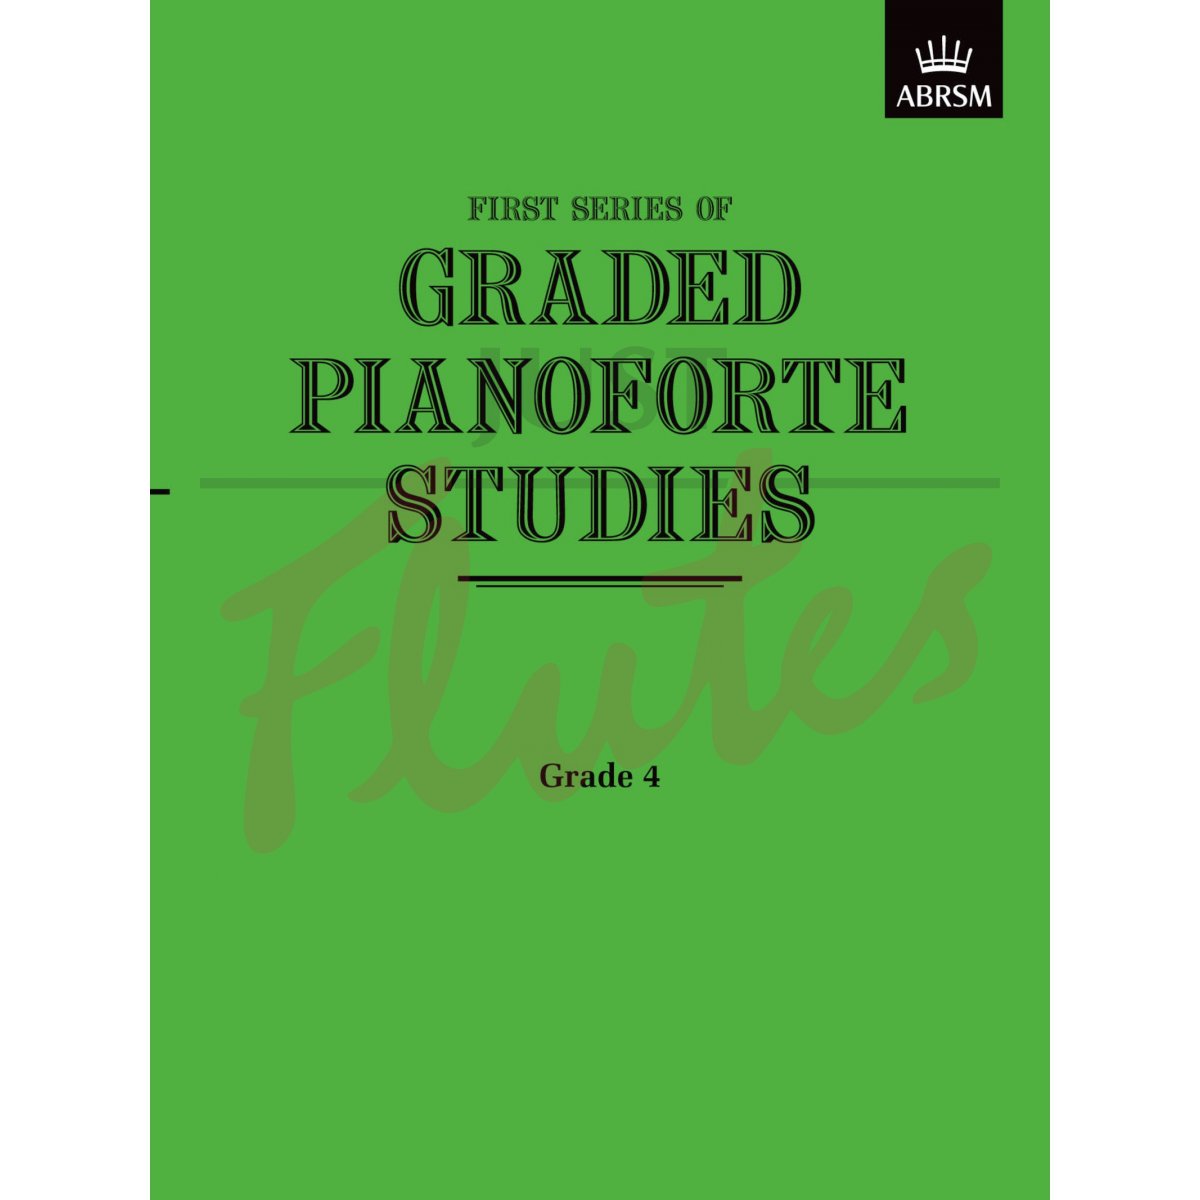 Graded Pianoforte Studies Series 1 Grade 4